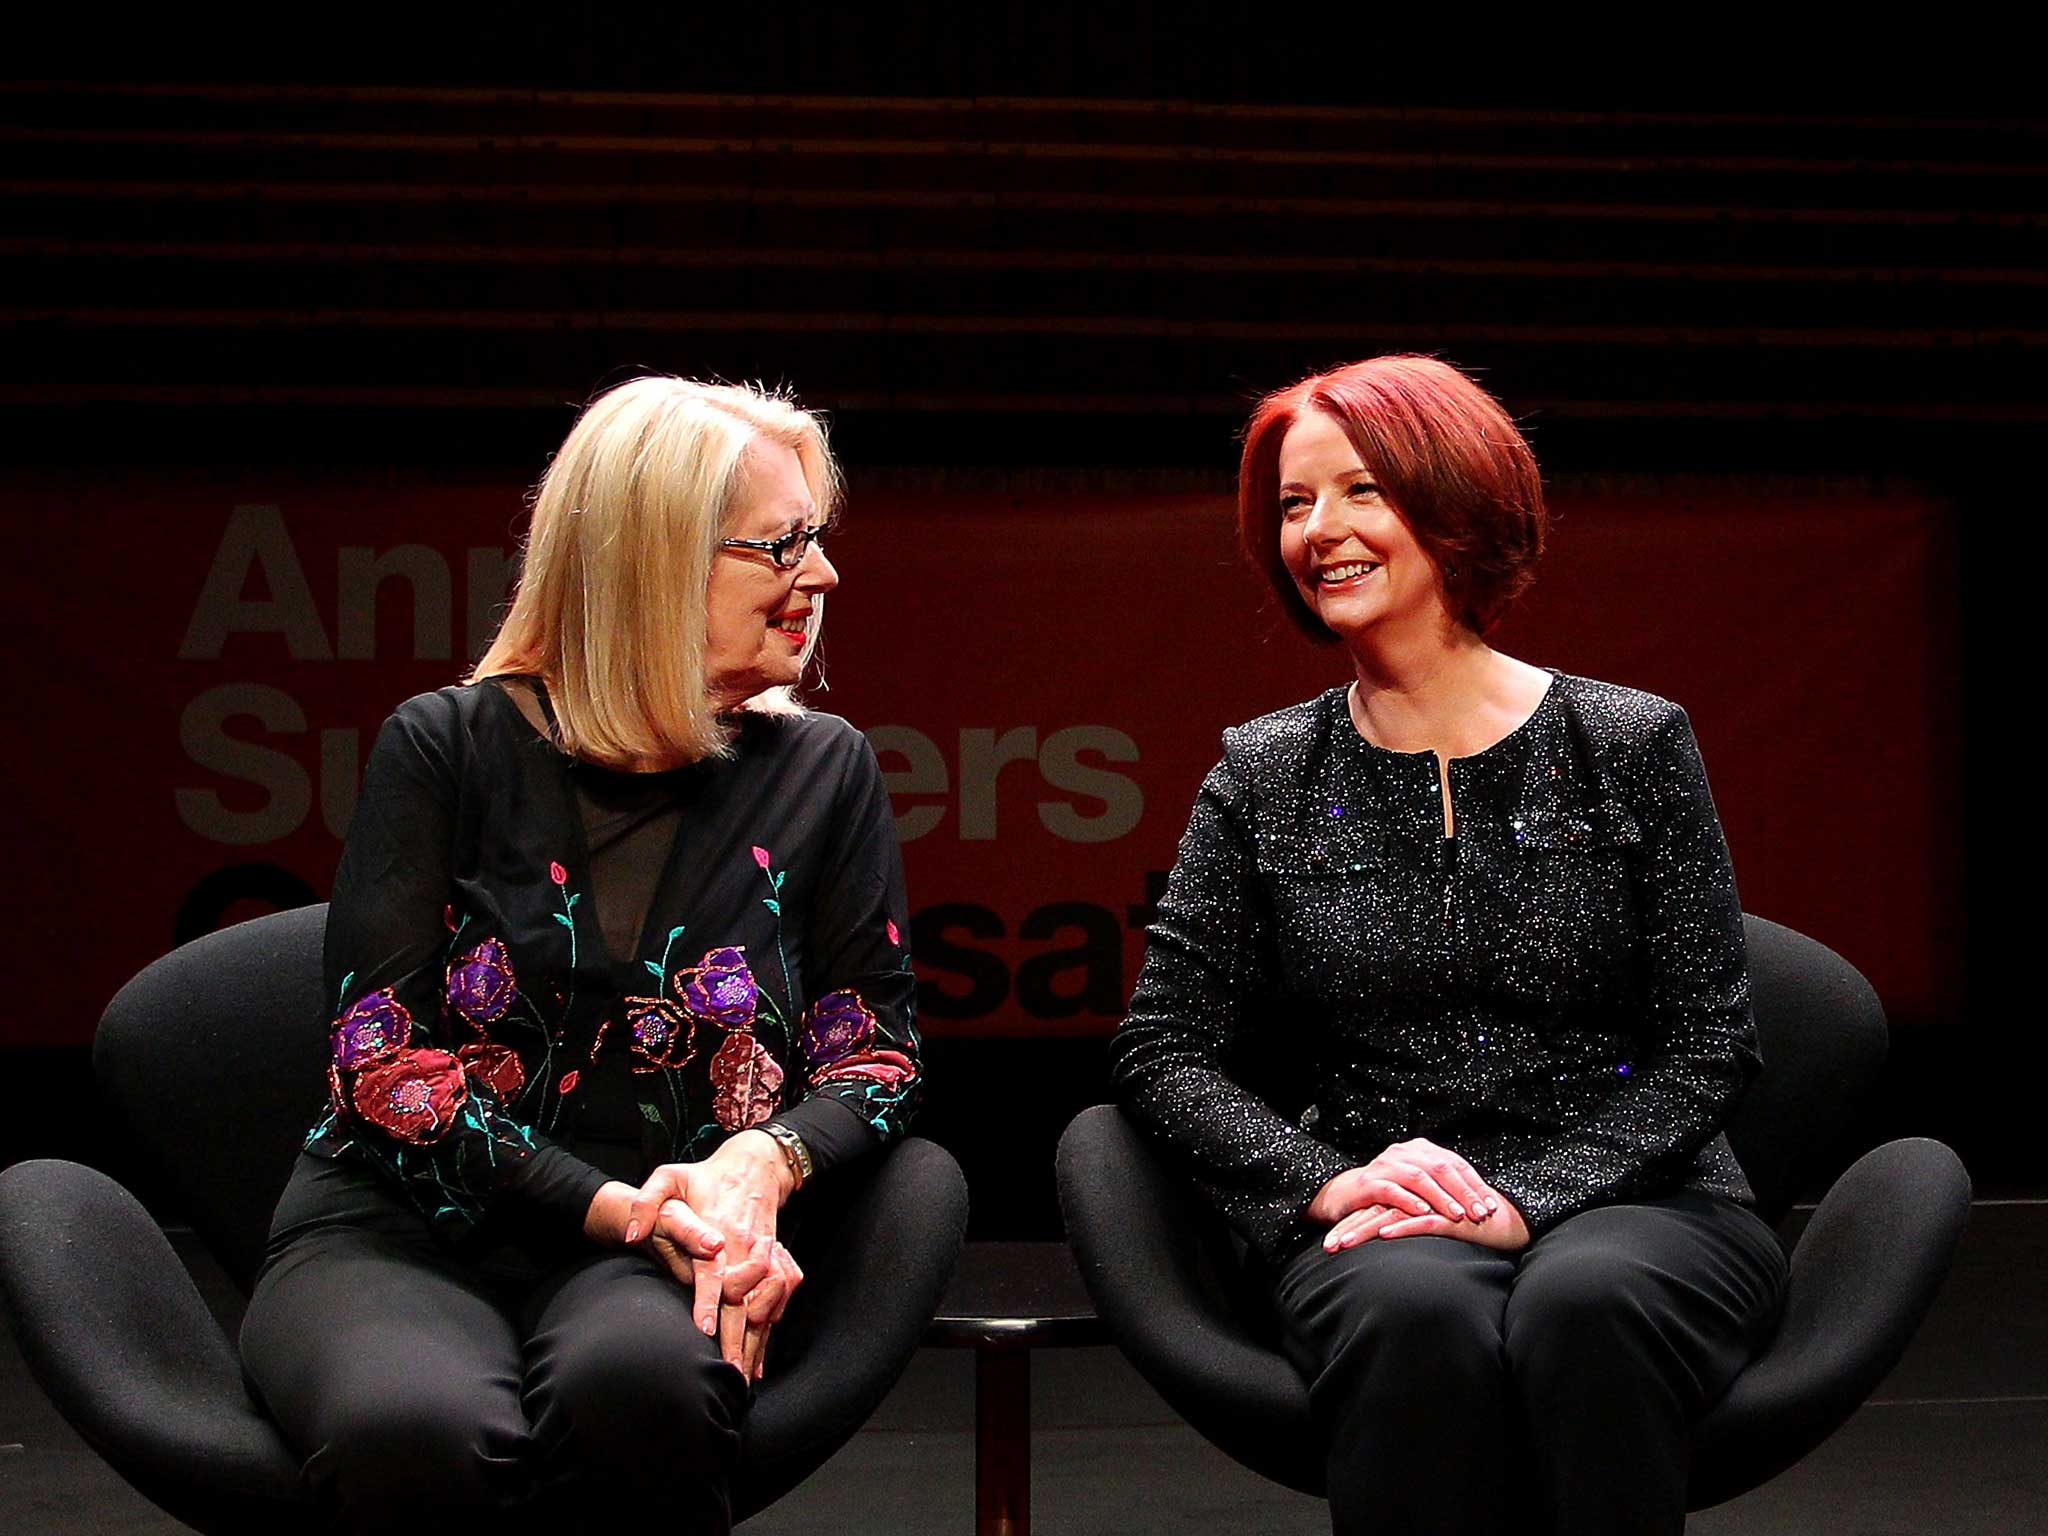 Anne Summers (left) in conversation with Julia Gillard (right)